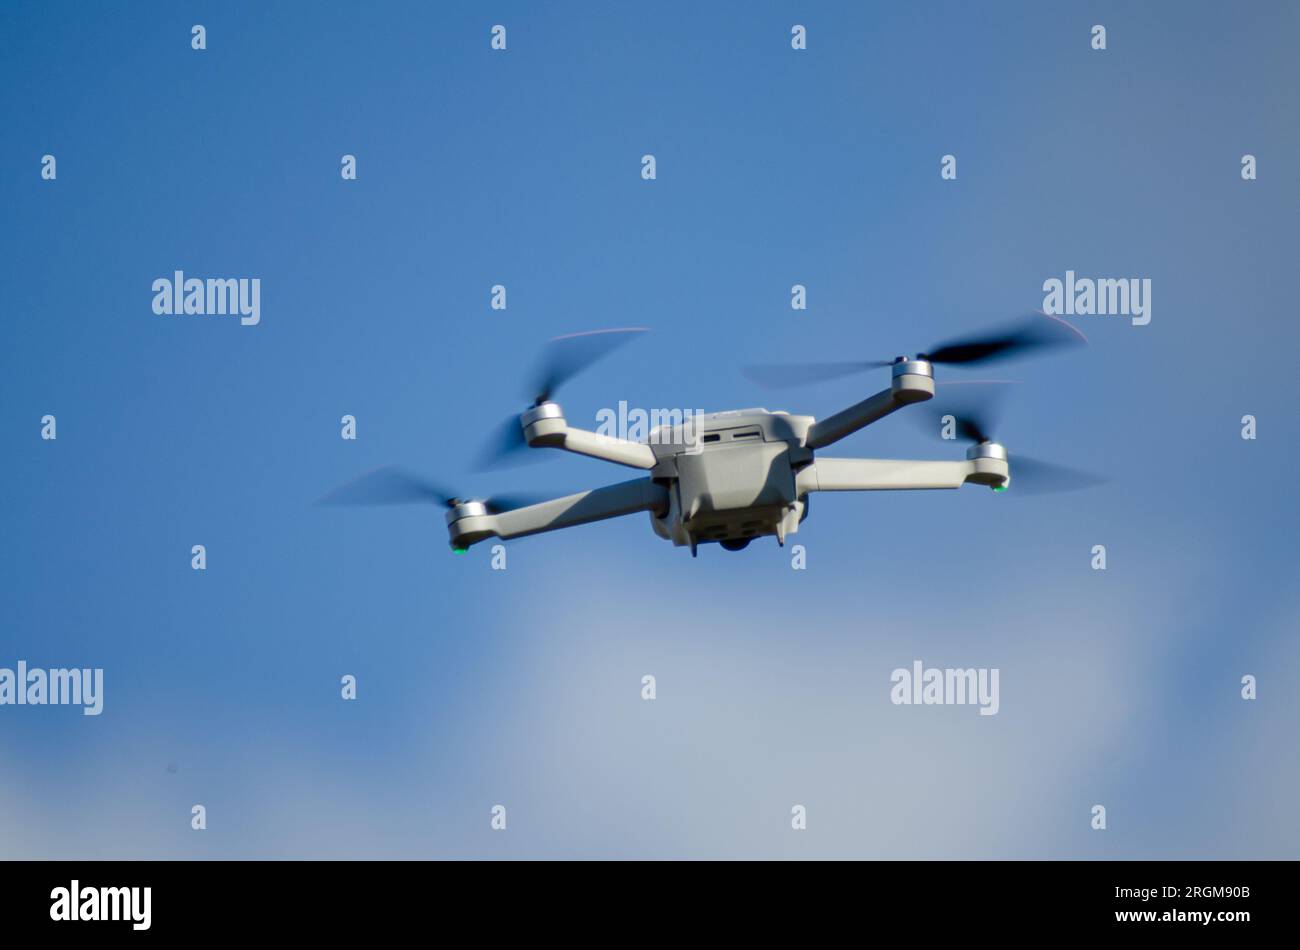 vigo, españa 07-31-2023 a DJI Mavic Mini 3 drone in flight, blue sky in the background. Stock Photo